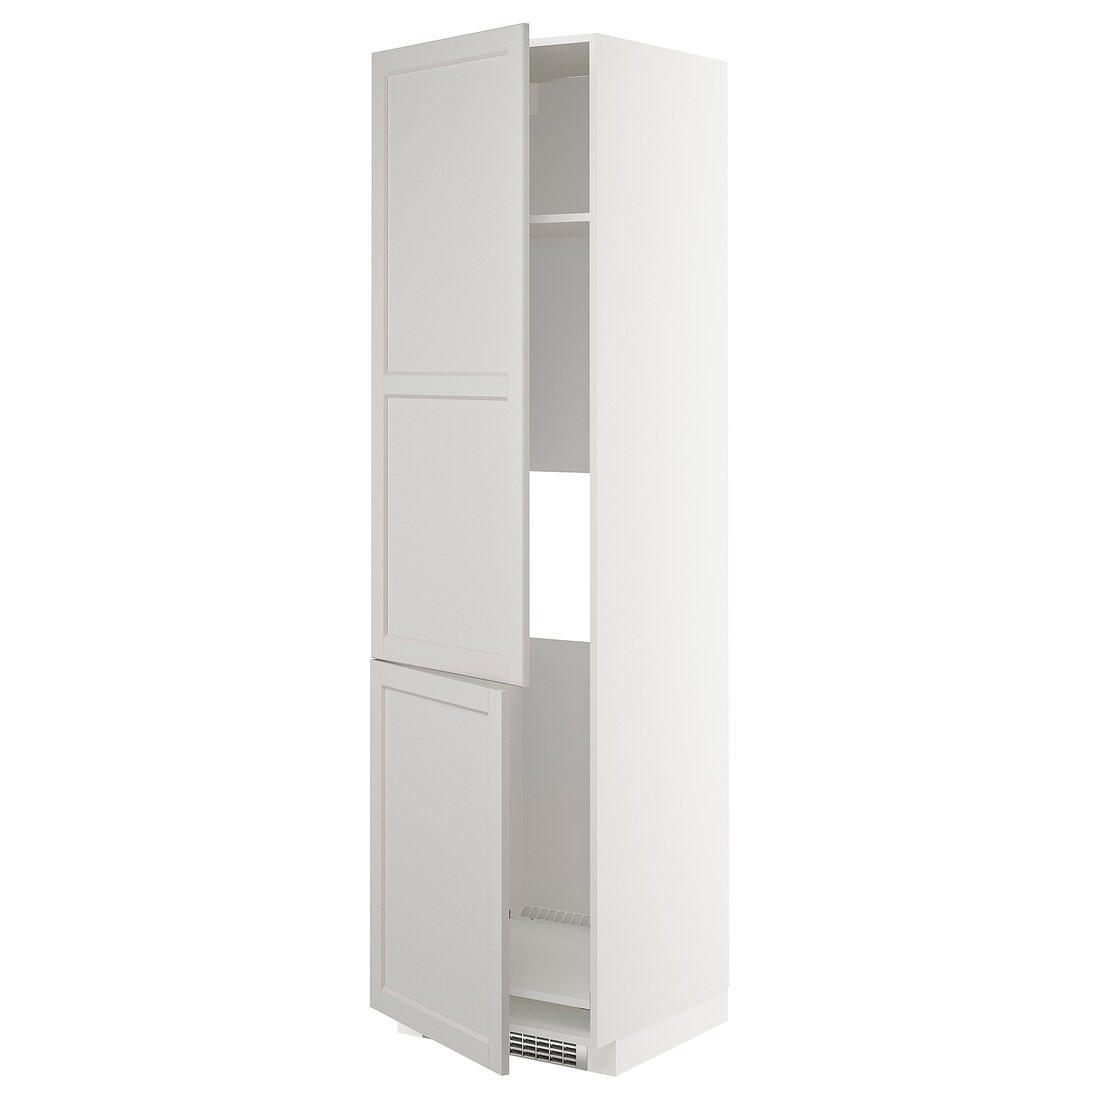 METOD МЕТОД Высокий шкаф для холодильника / морозильника / 2дверцы, белый / Lerhyttan светло-серый, 60x60x220 см